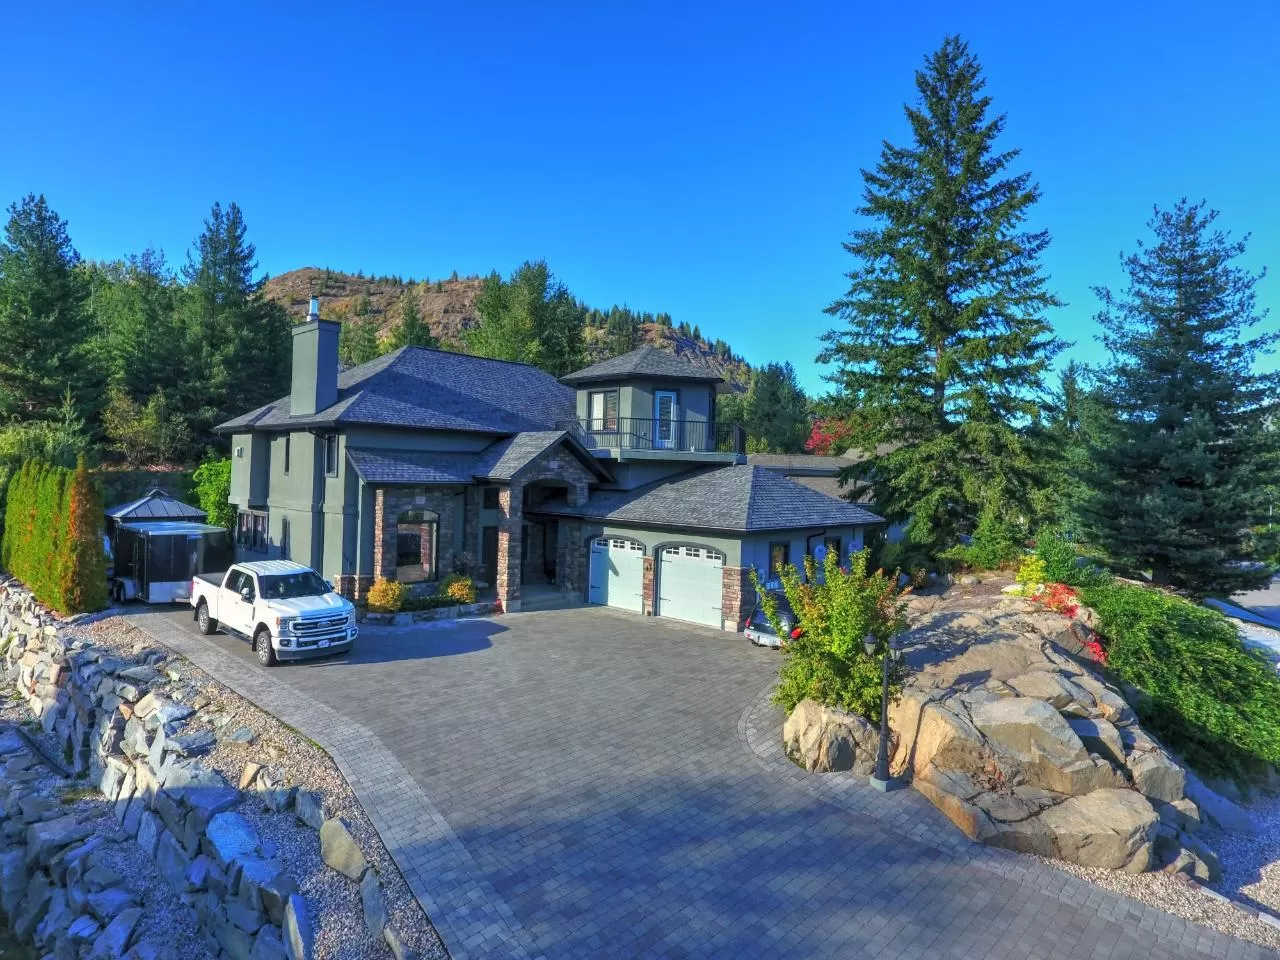 House for rent: 537 Blake Court, Trail, British Columbia V1R 4V9